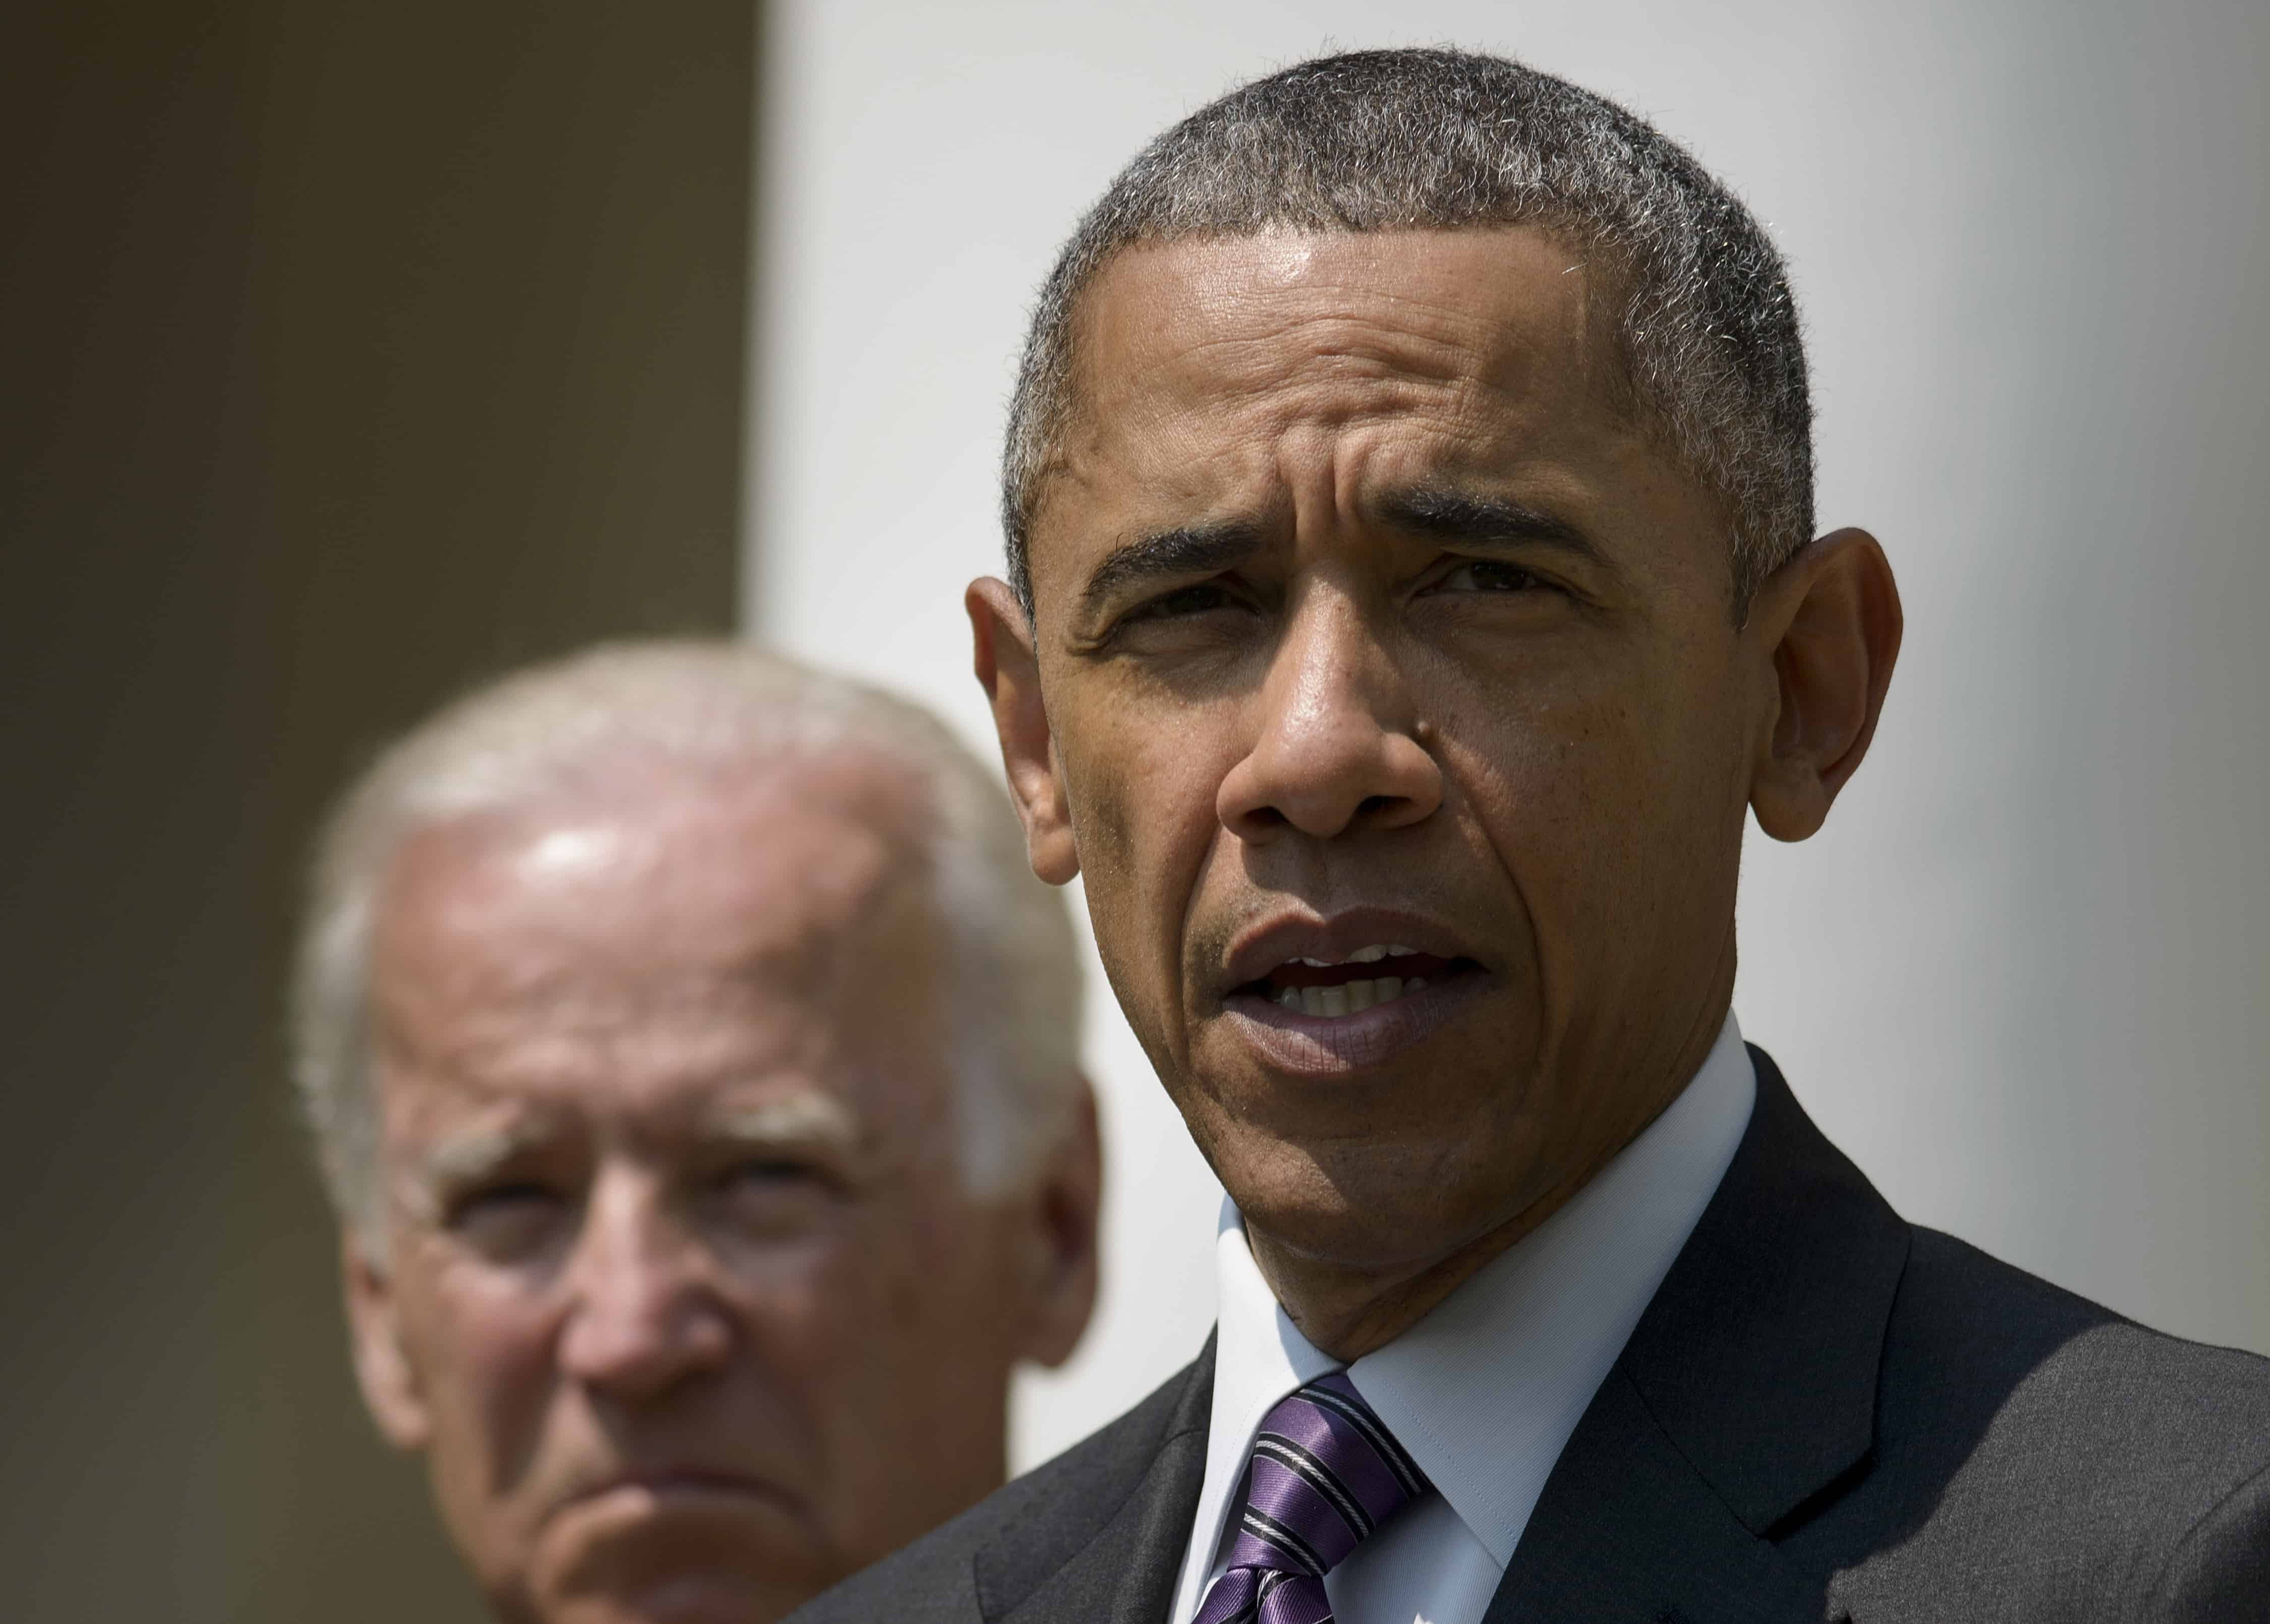 U.S. Vice President Joe Biden land President Barack Obama on Cuba embargo.